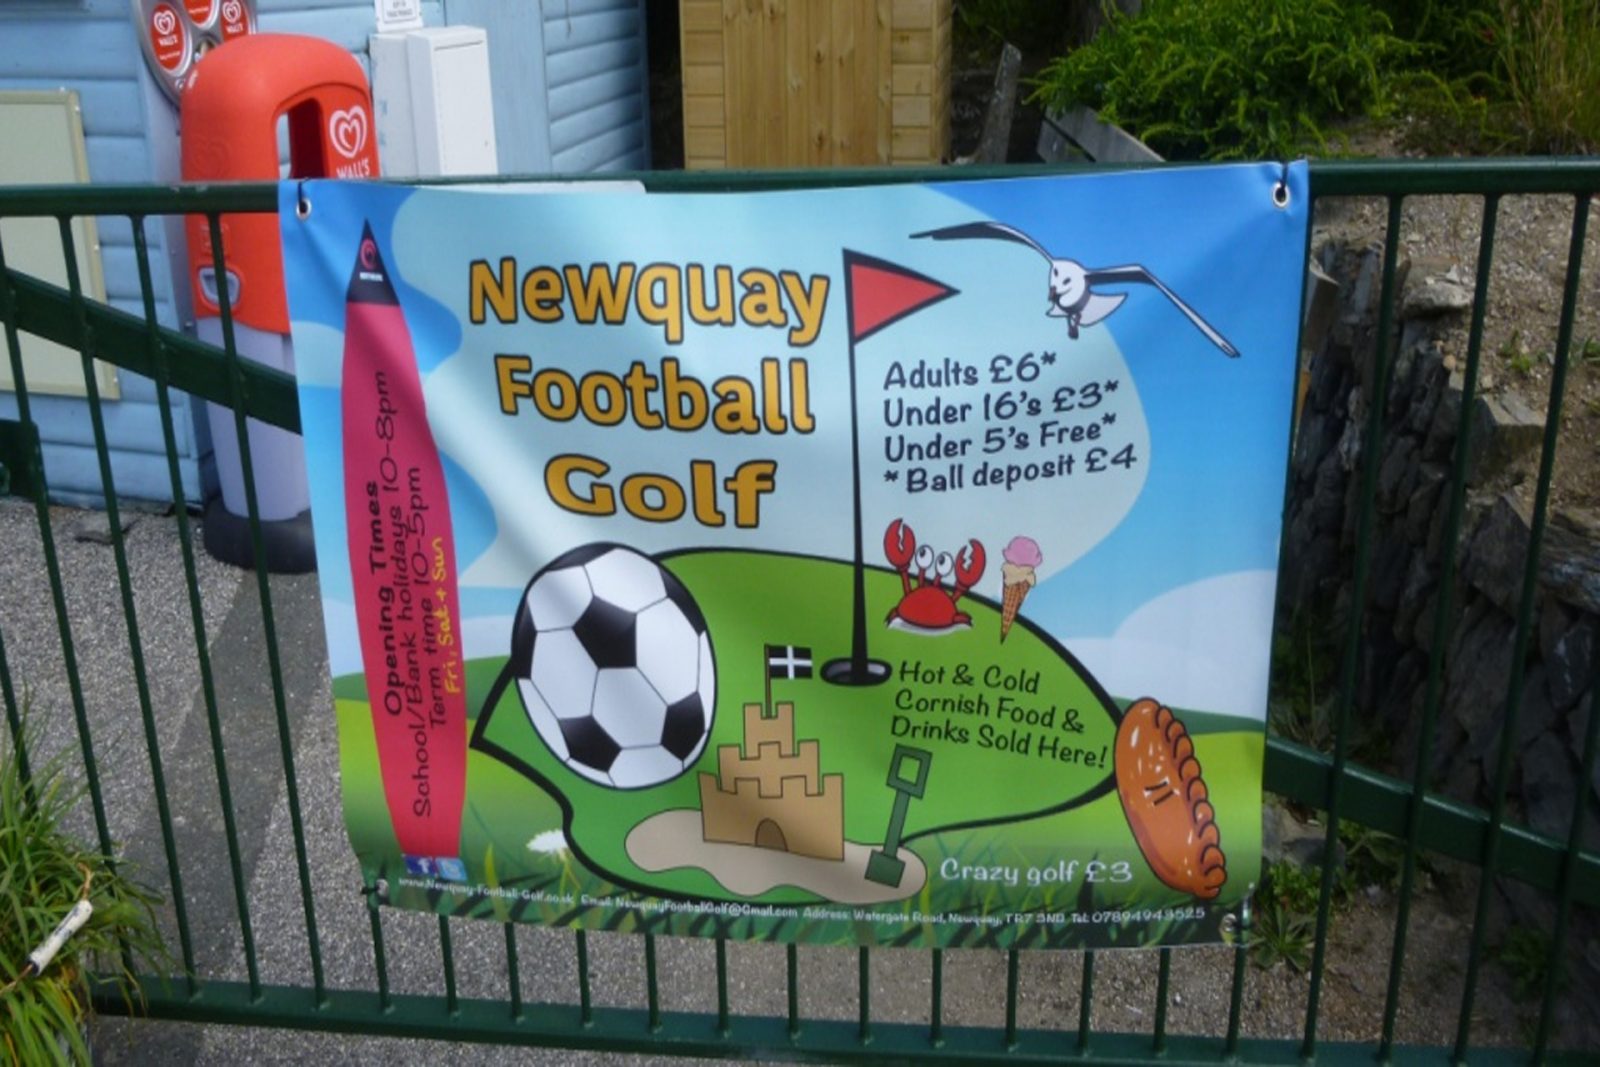 football_golf_newquay_newquay-clubbing